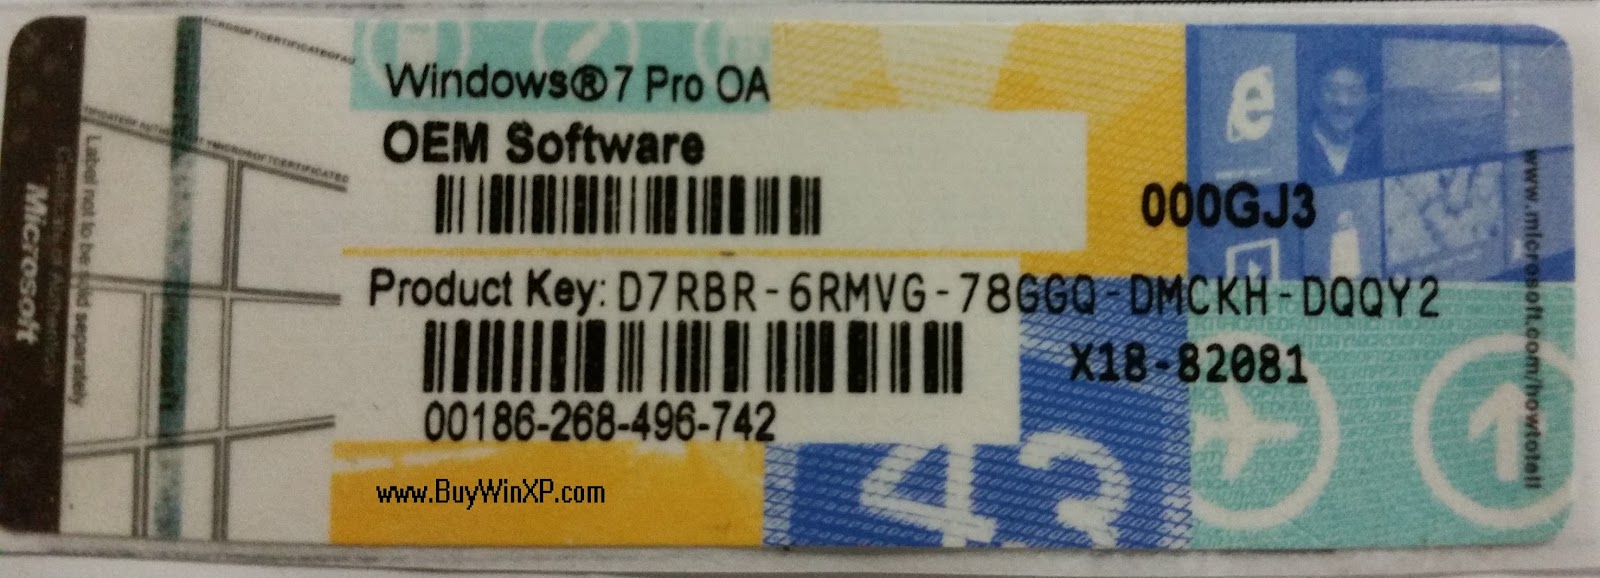 Free Windows 7 Professional Product Keys 32 64 bit COA ...